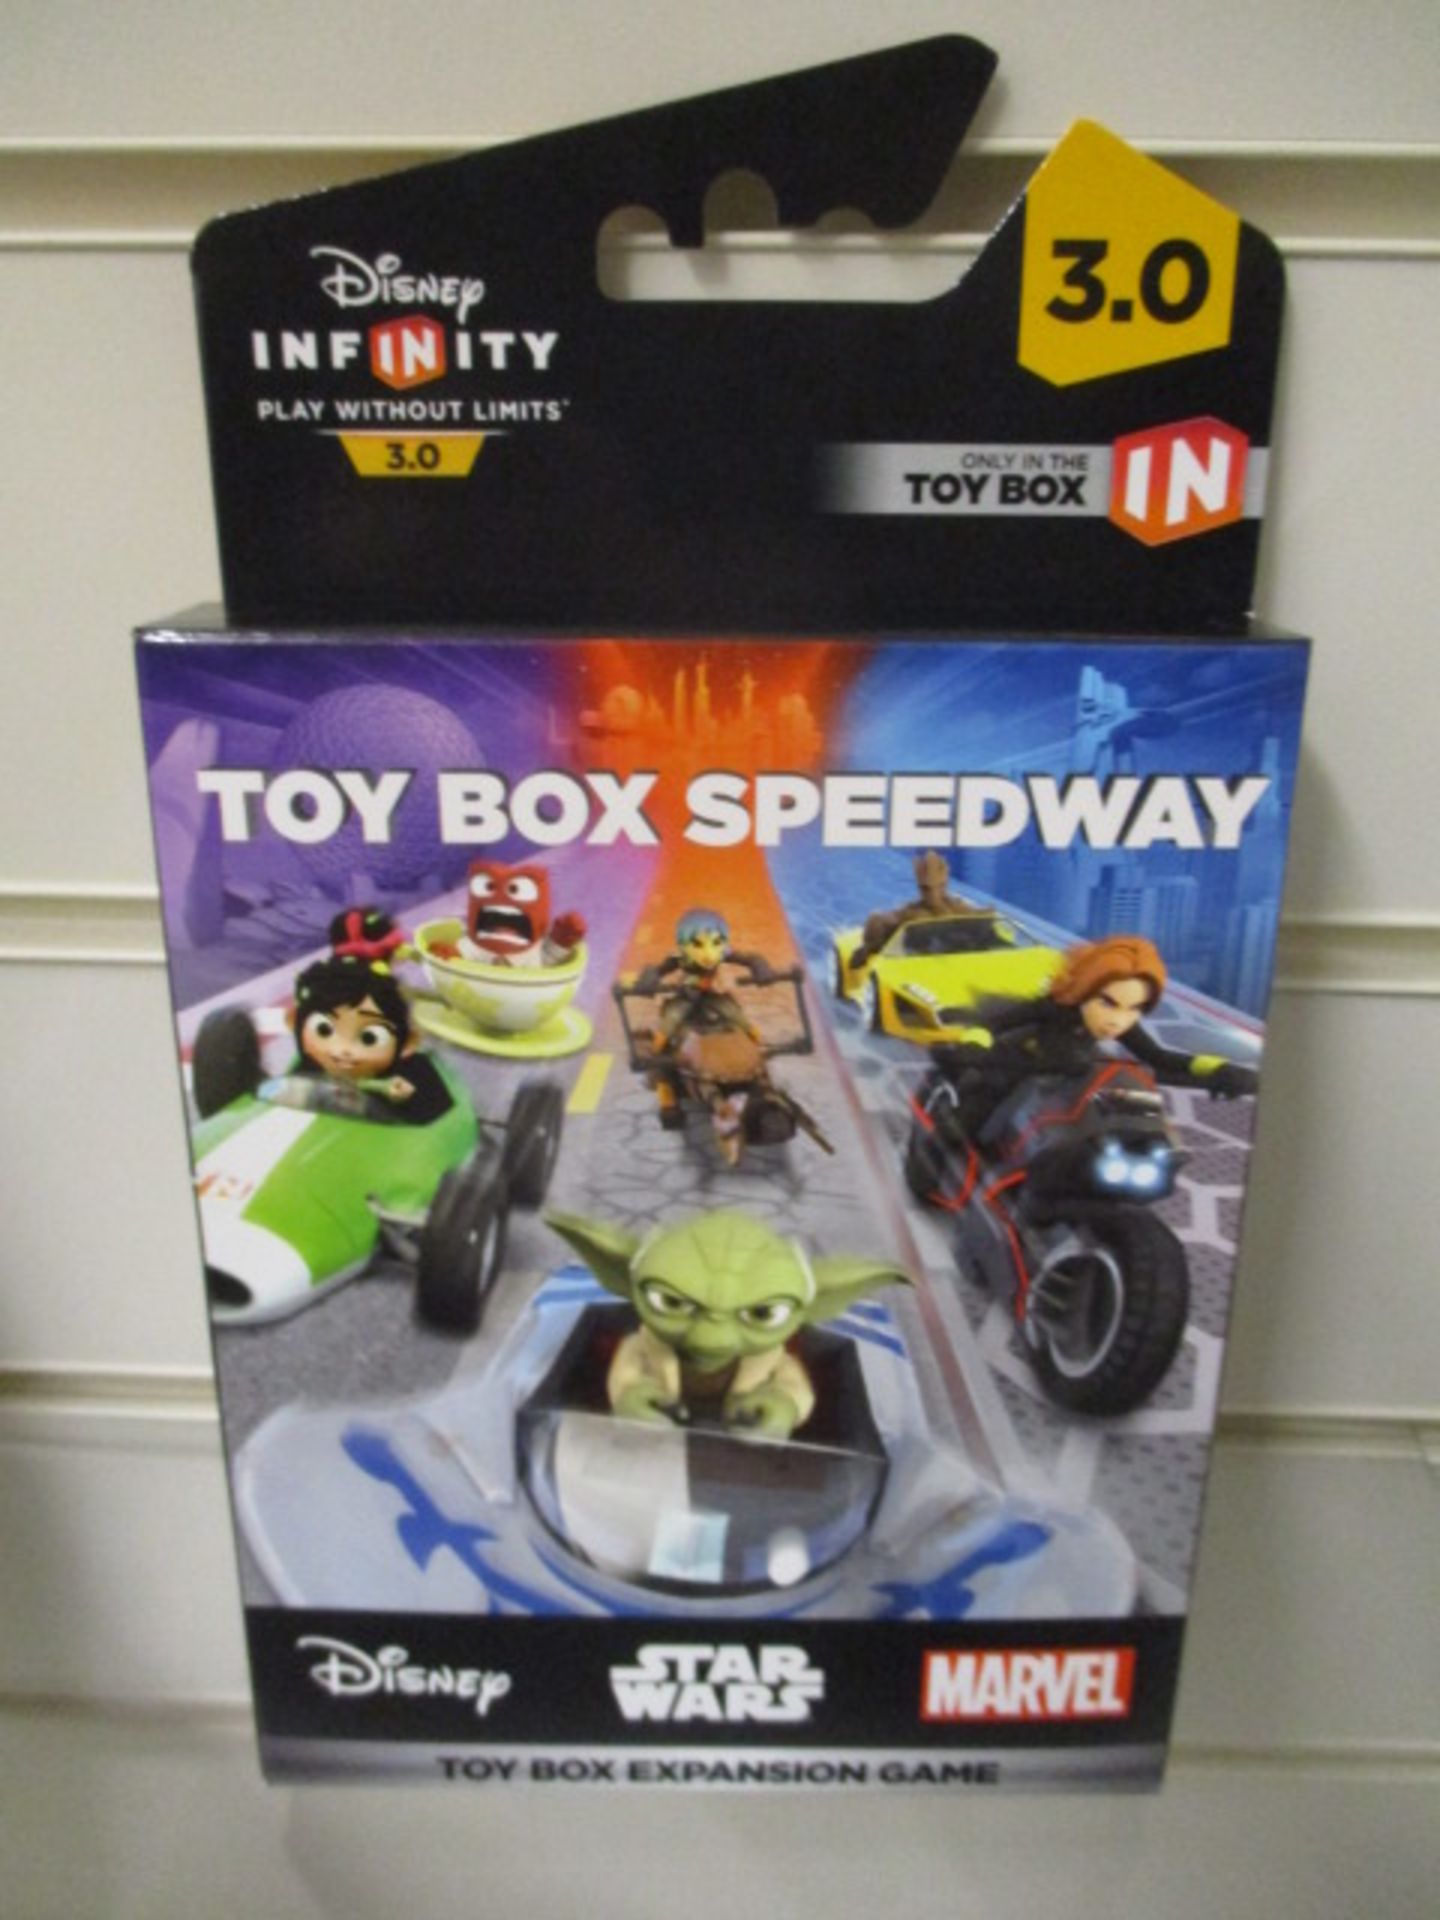 500 x Disney Infinity Toy Box Expansion Game